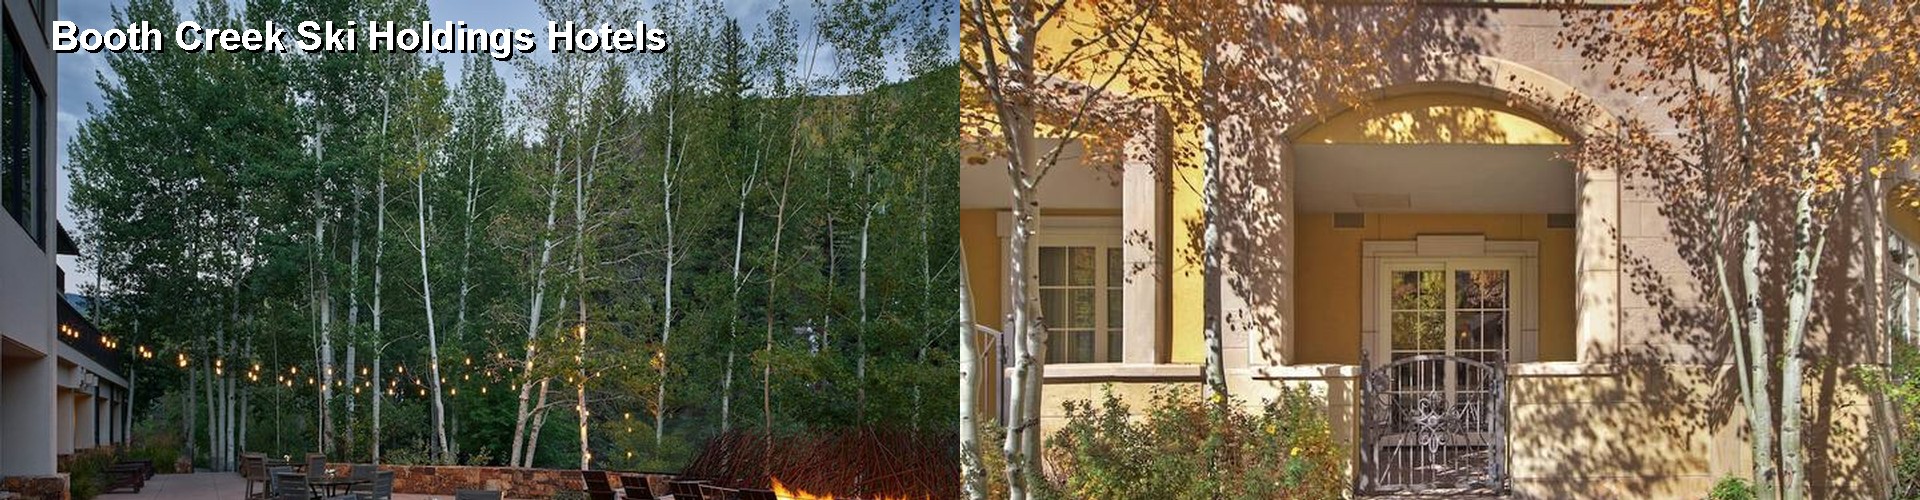 5 Best Hotels near Booth Creek Ski Holdings